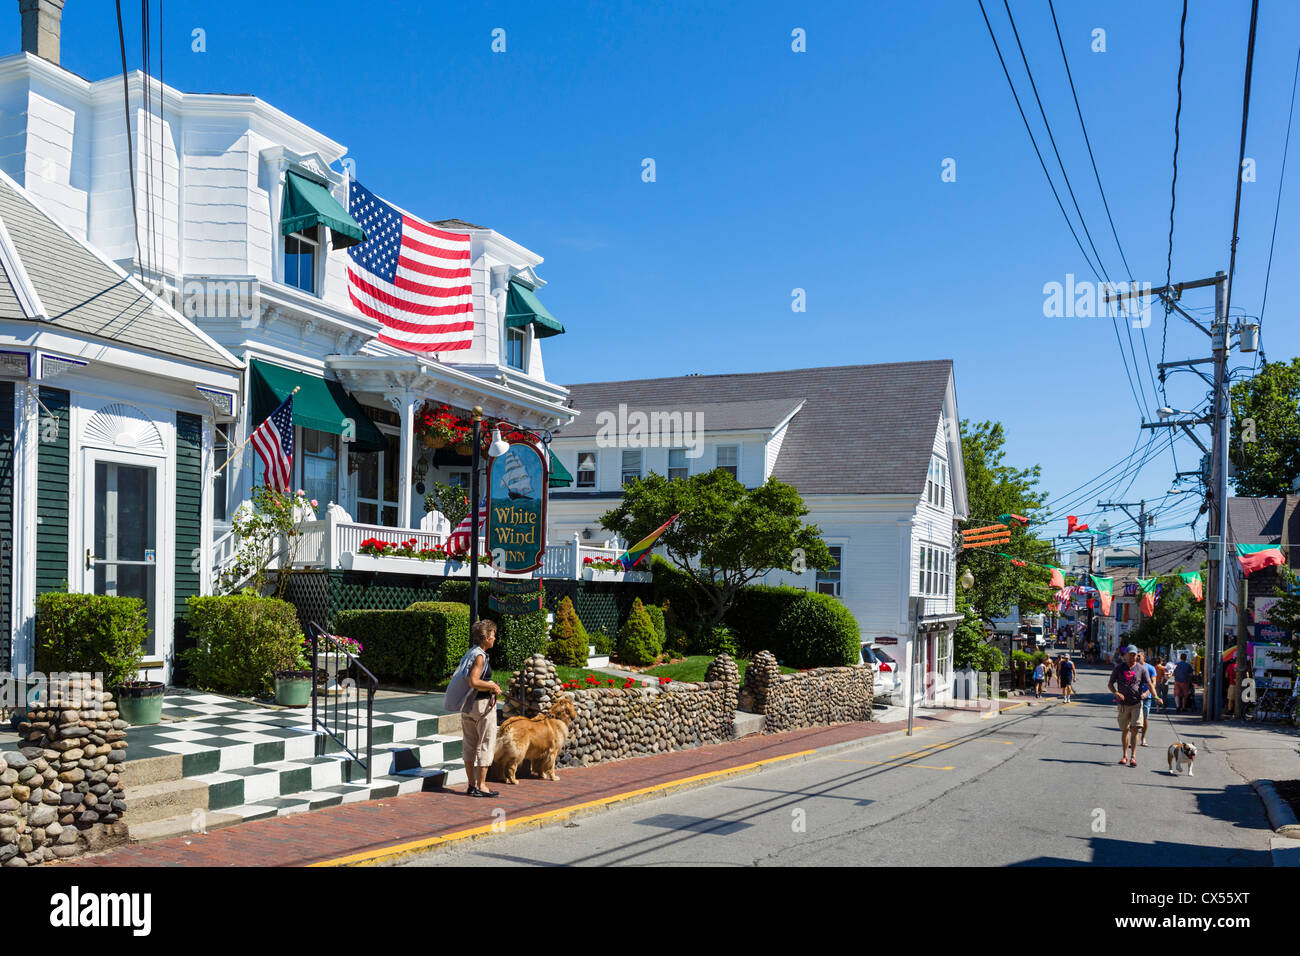 White Wind Inn on Commercial Street (the Main Street), Provincetown, Cape Cod, Massachusetts, USA Stock Photo